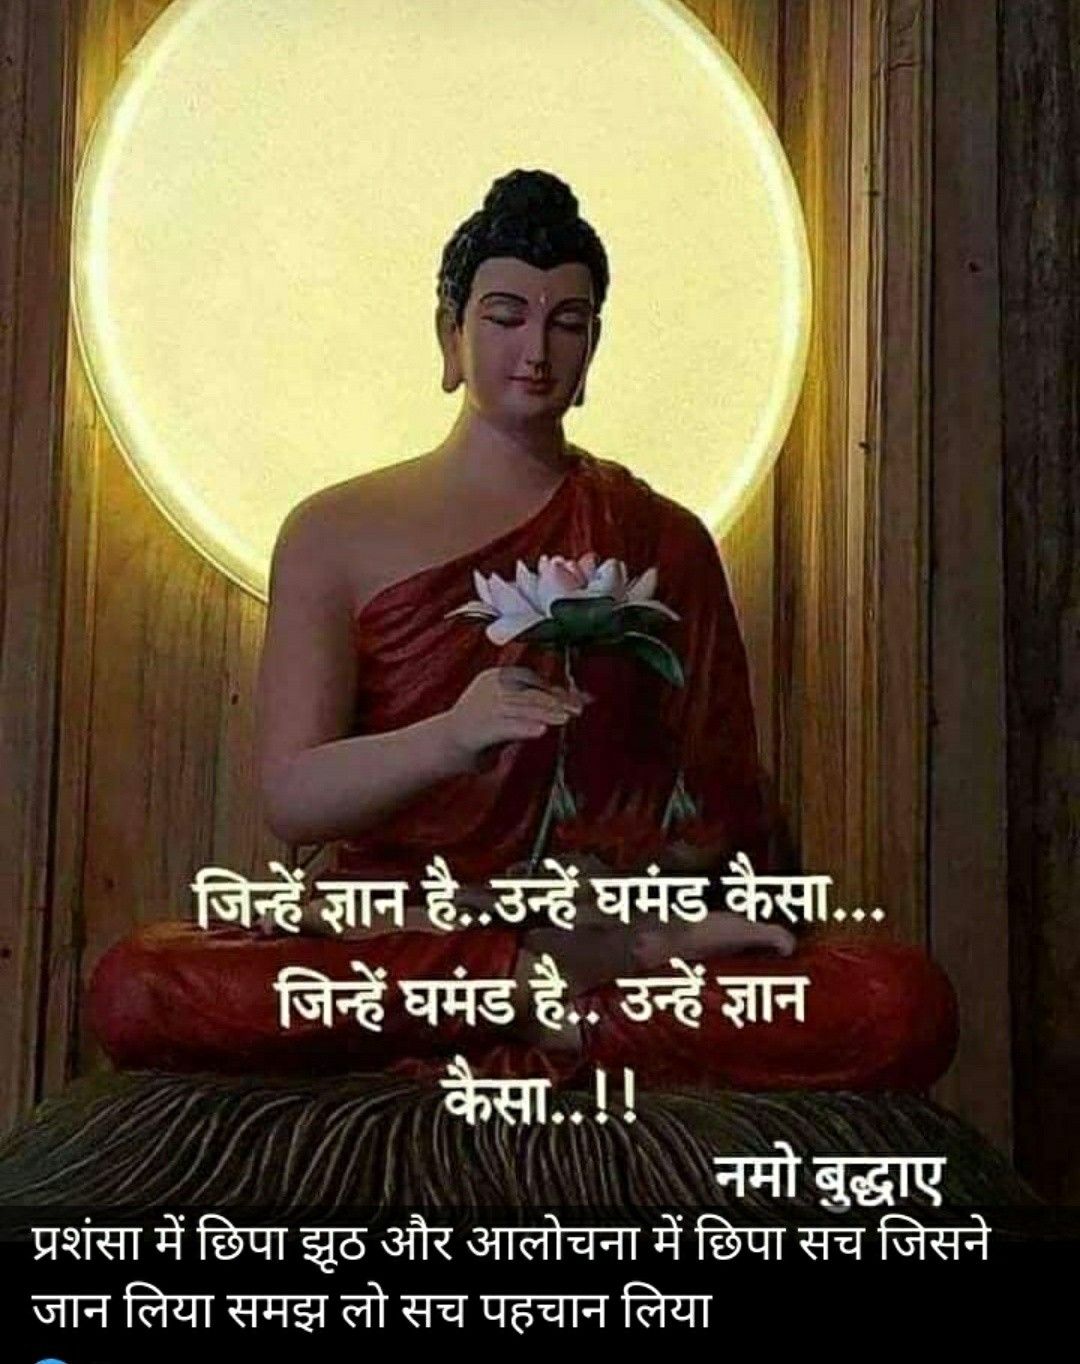 Buddha motivational quotes in hindi